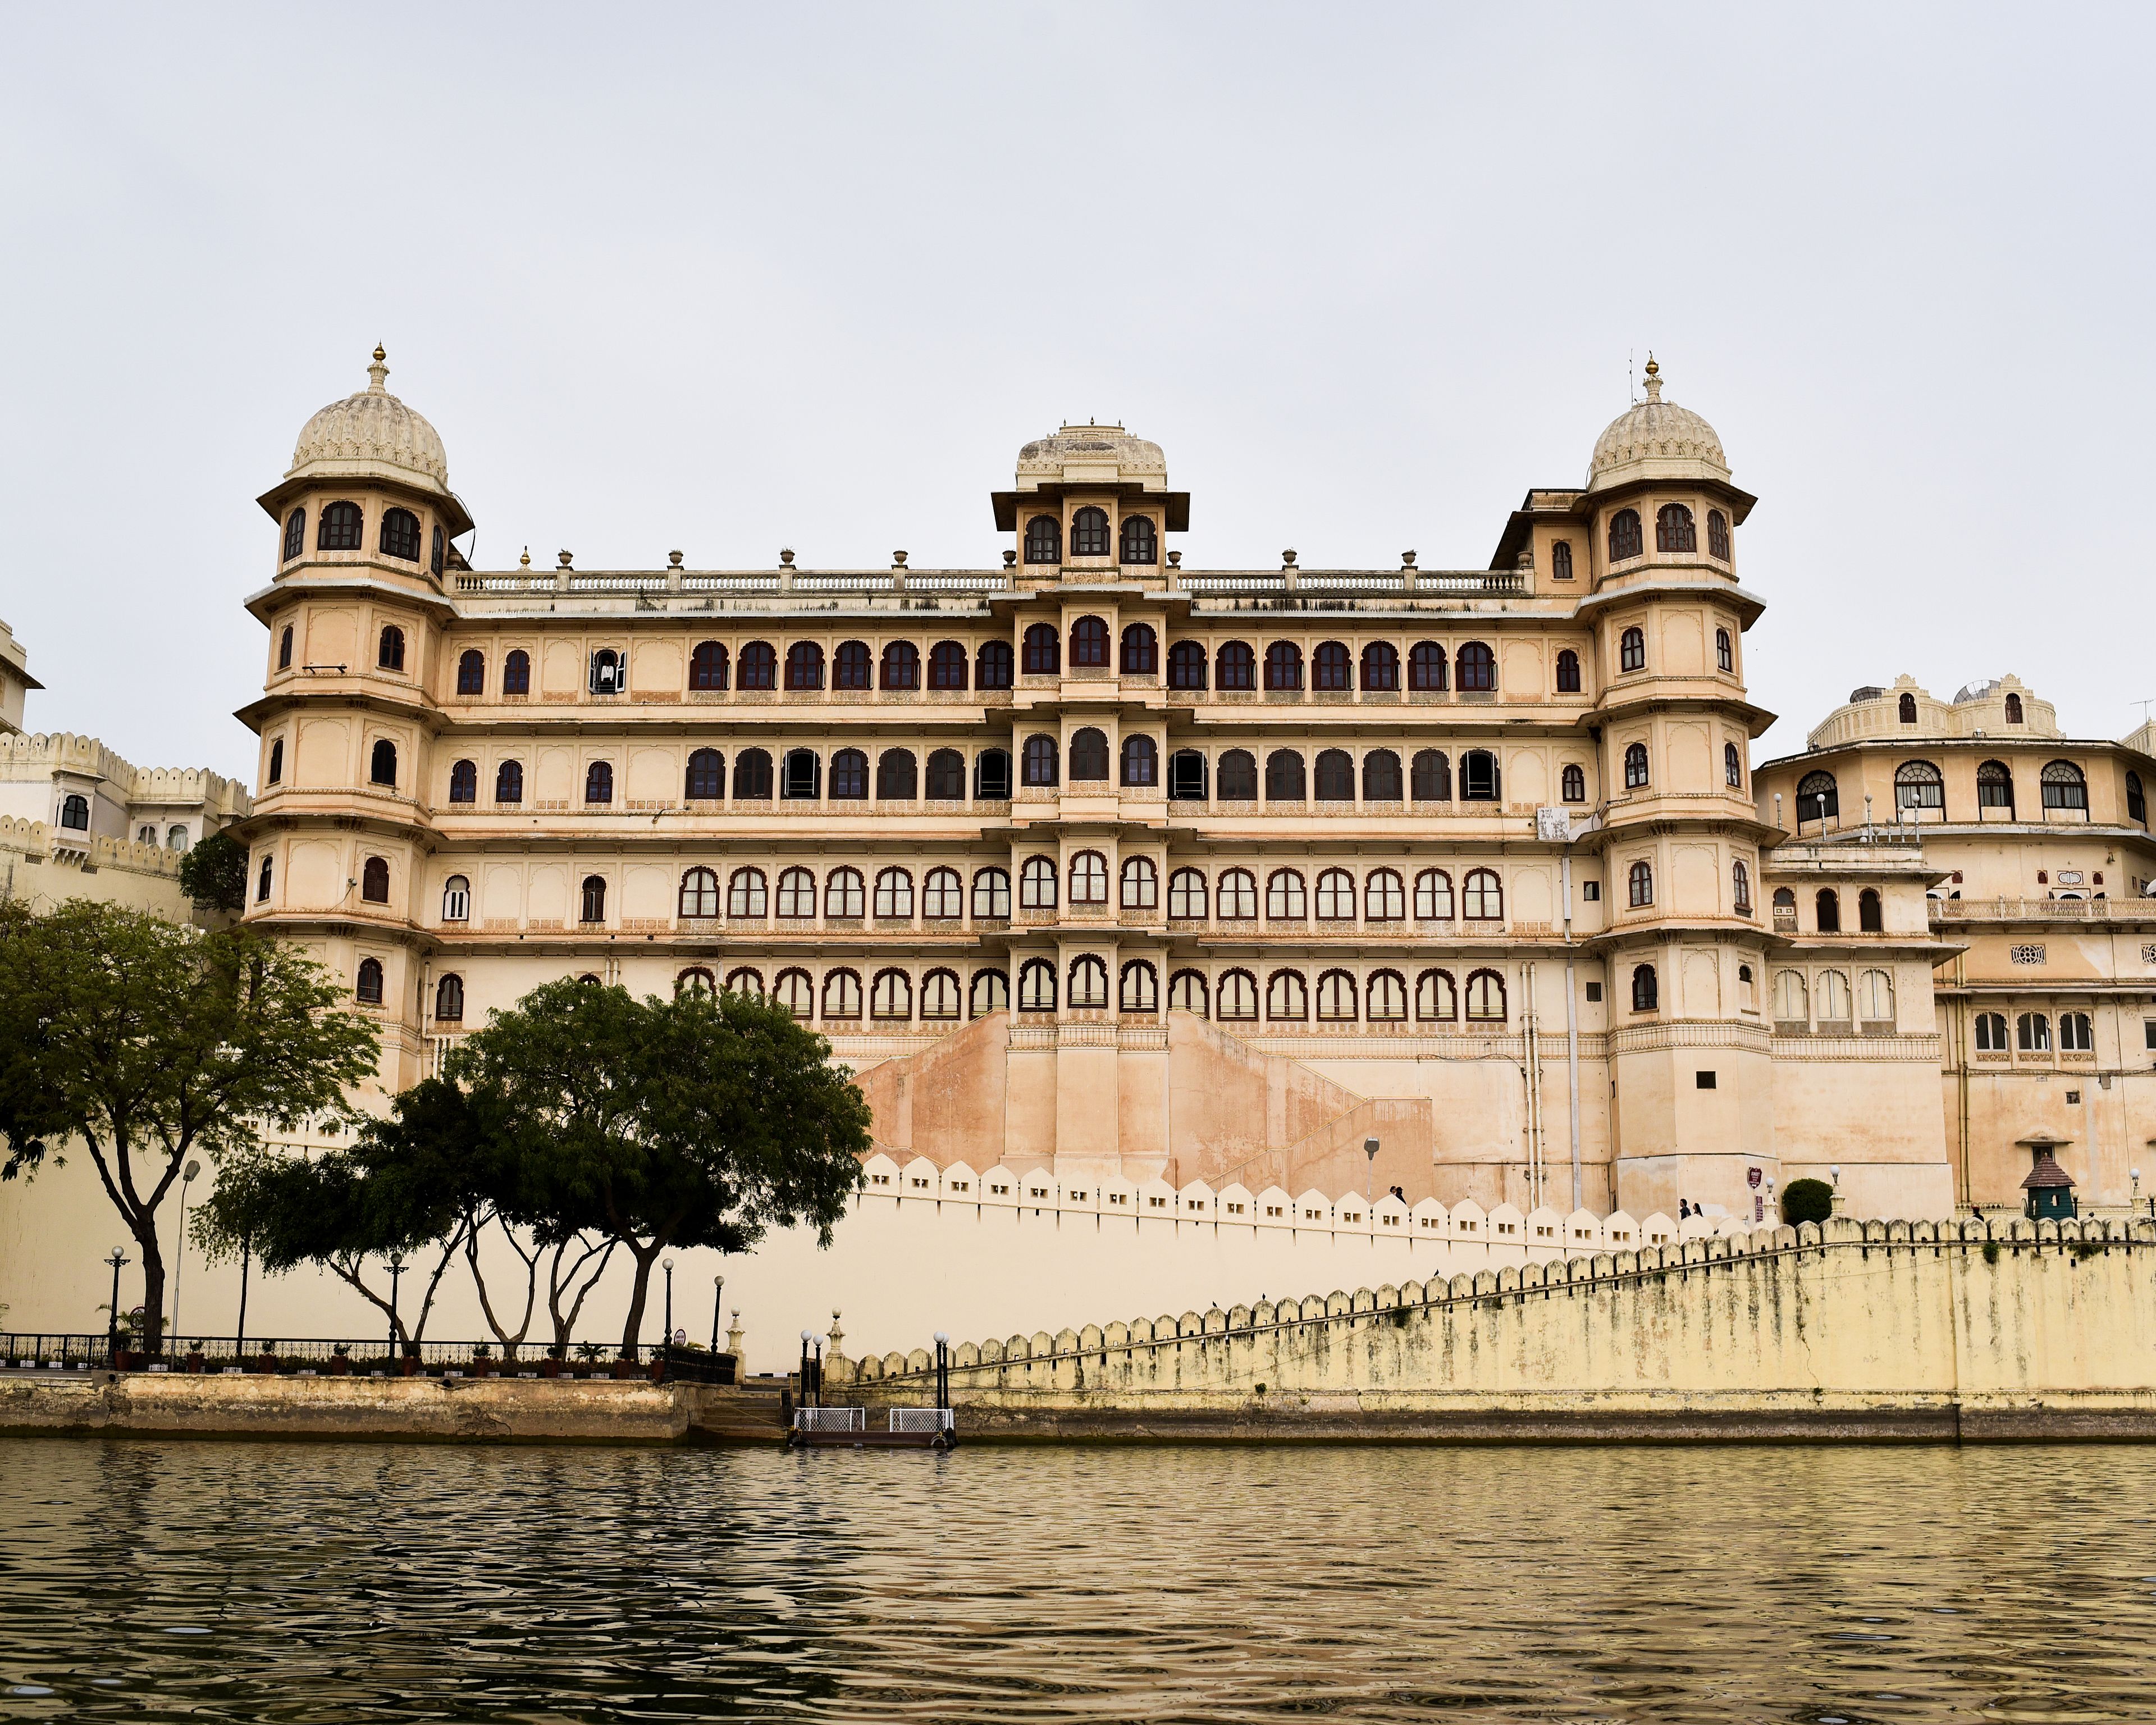 Rajasthan e Taj Mahal